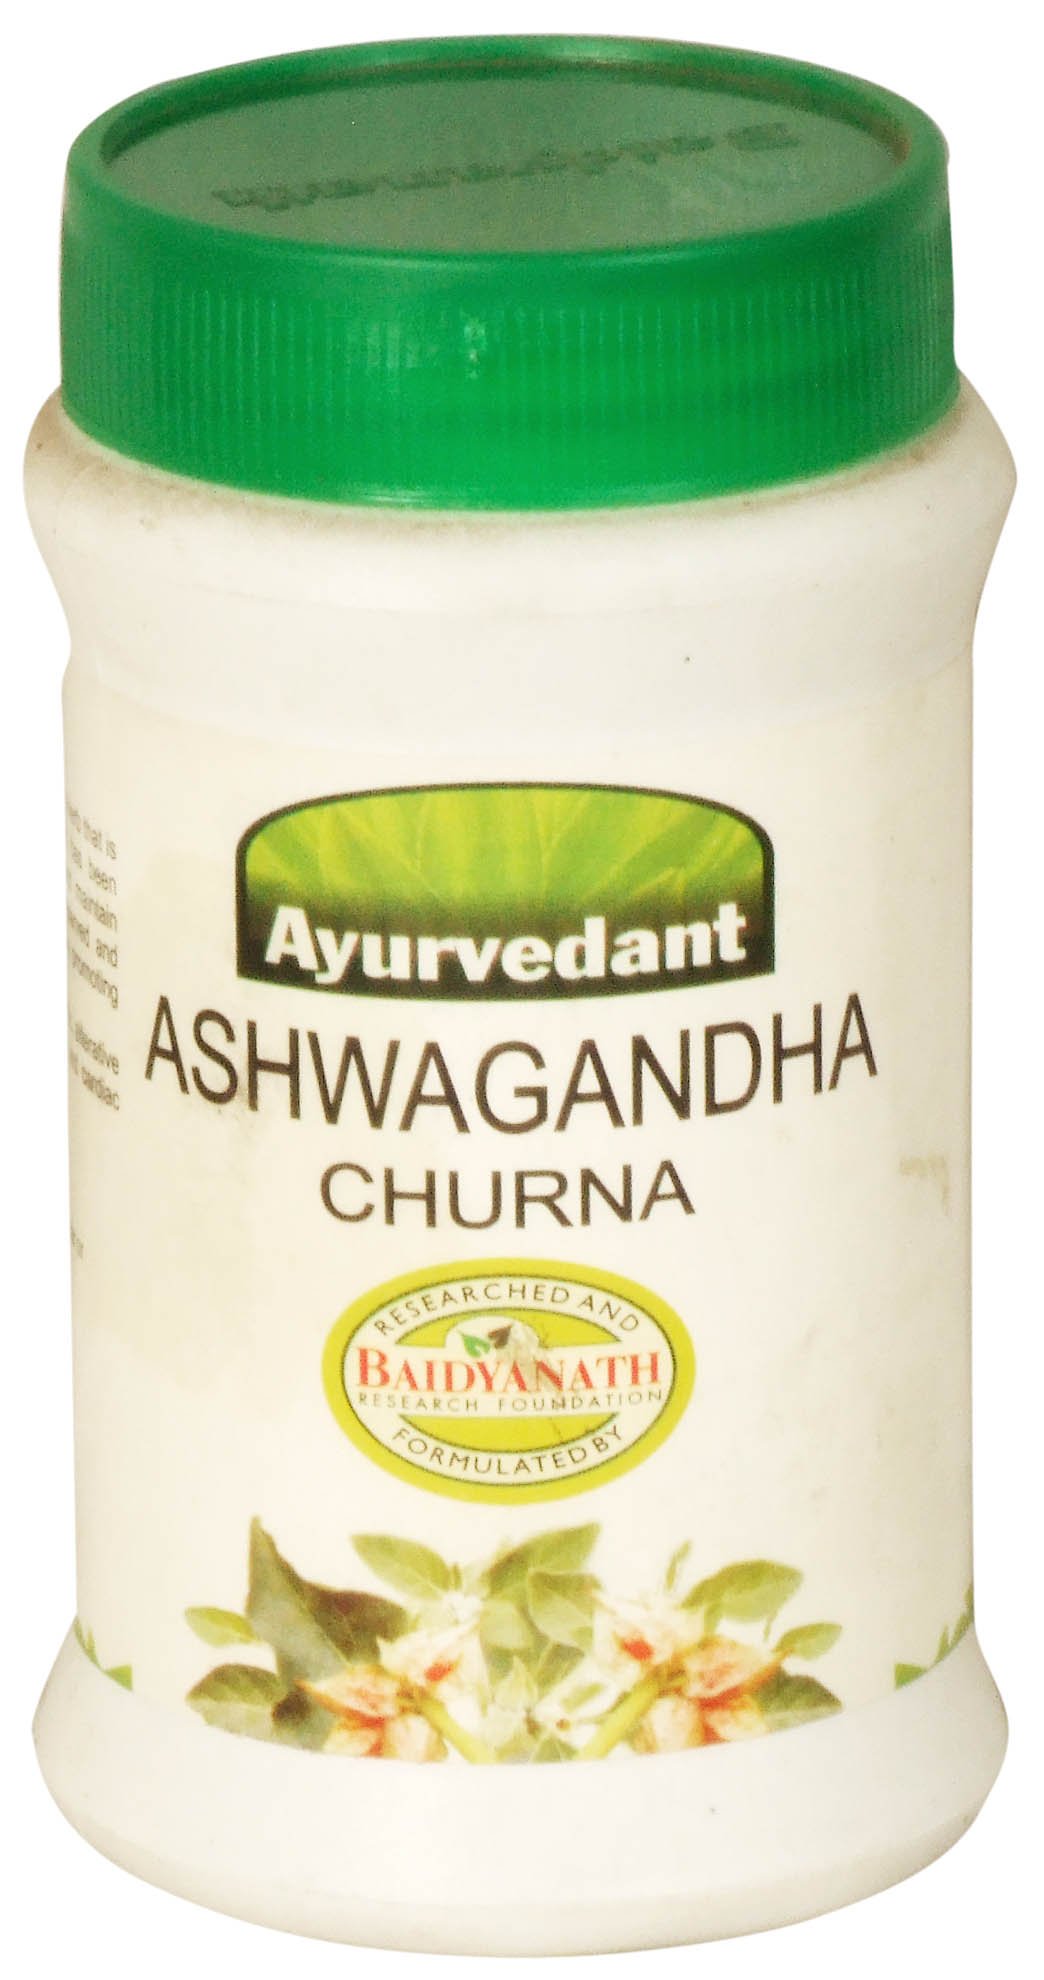 which ashwagandha churna is best